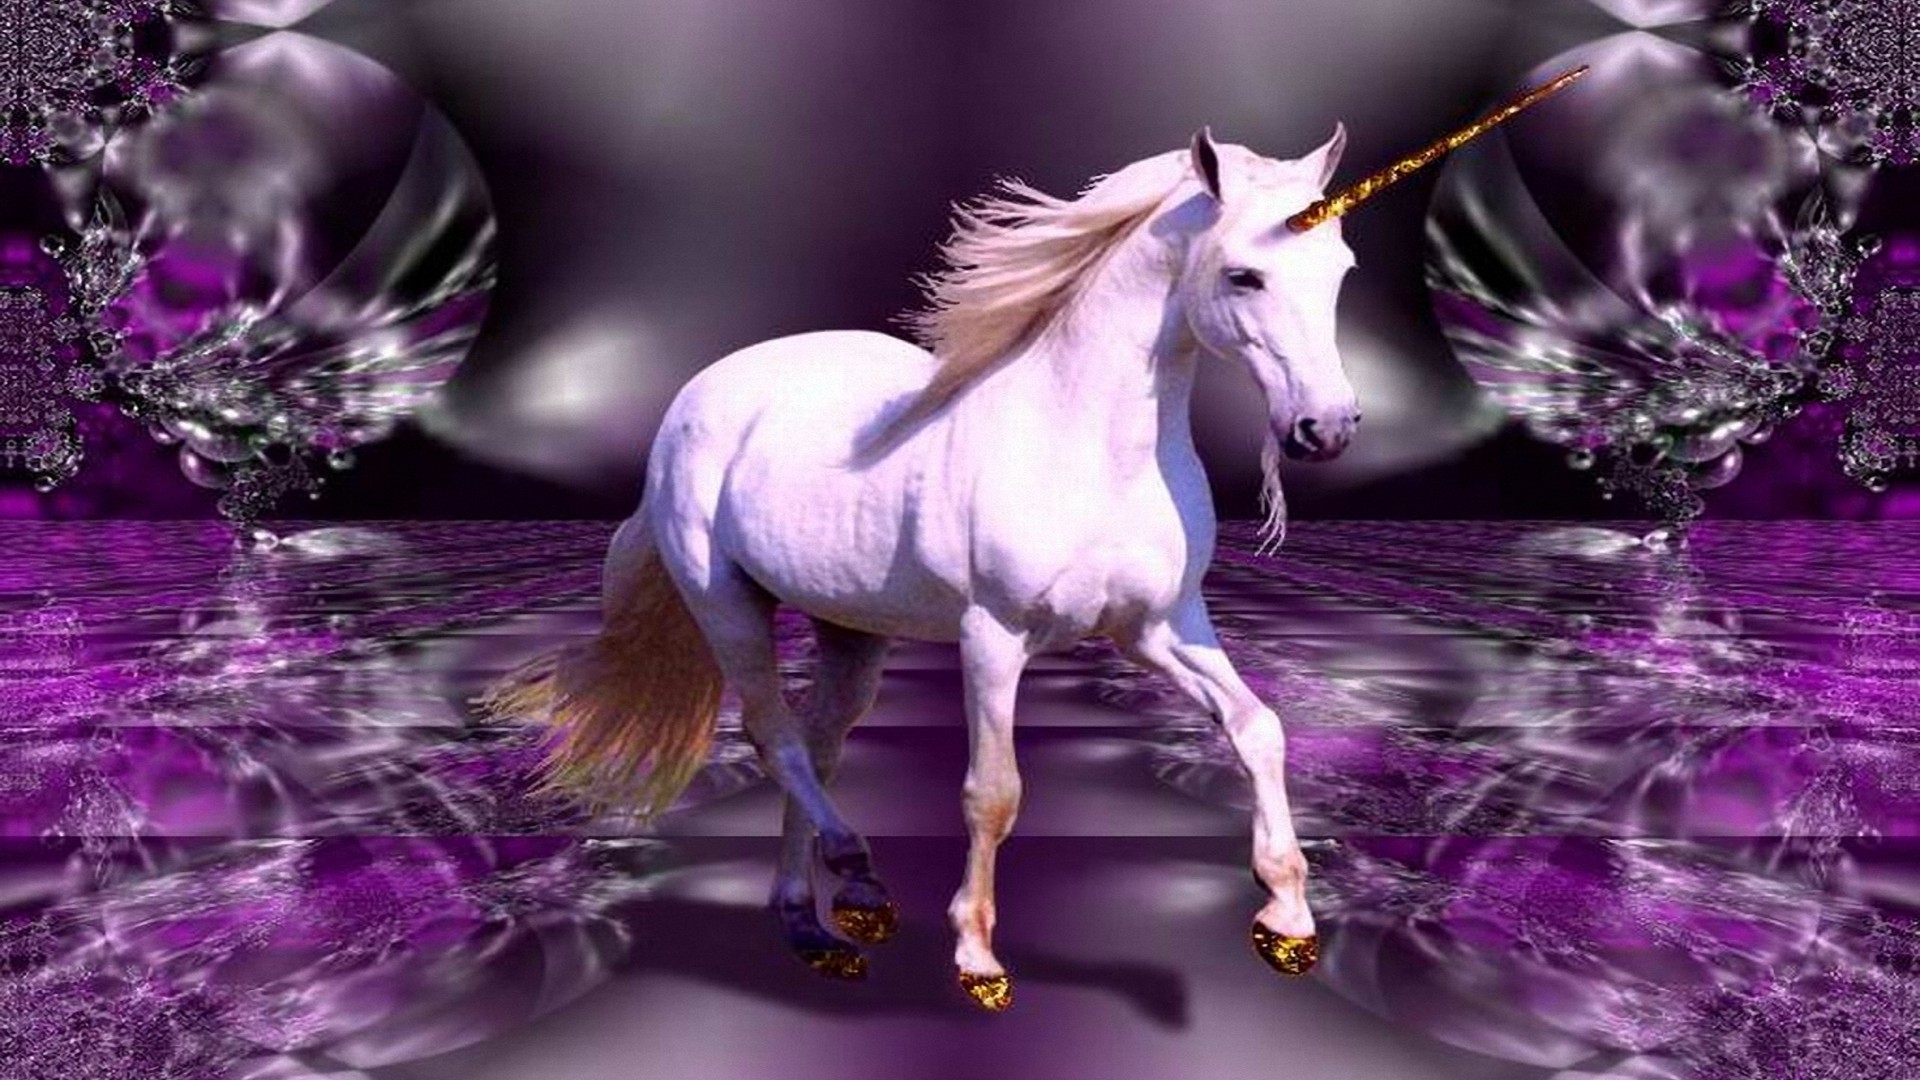 unicorn wallpaper hd,unicorn,fictional character,mythical creature,purple,lavender